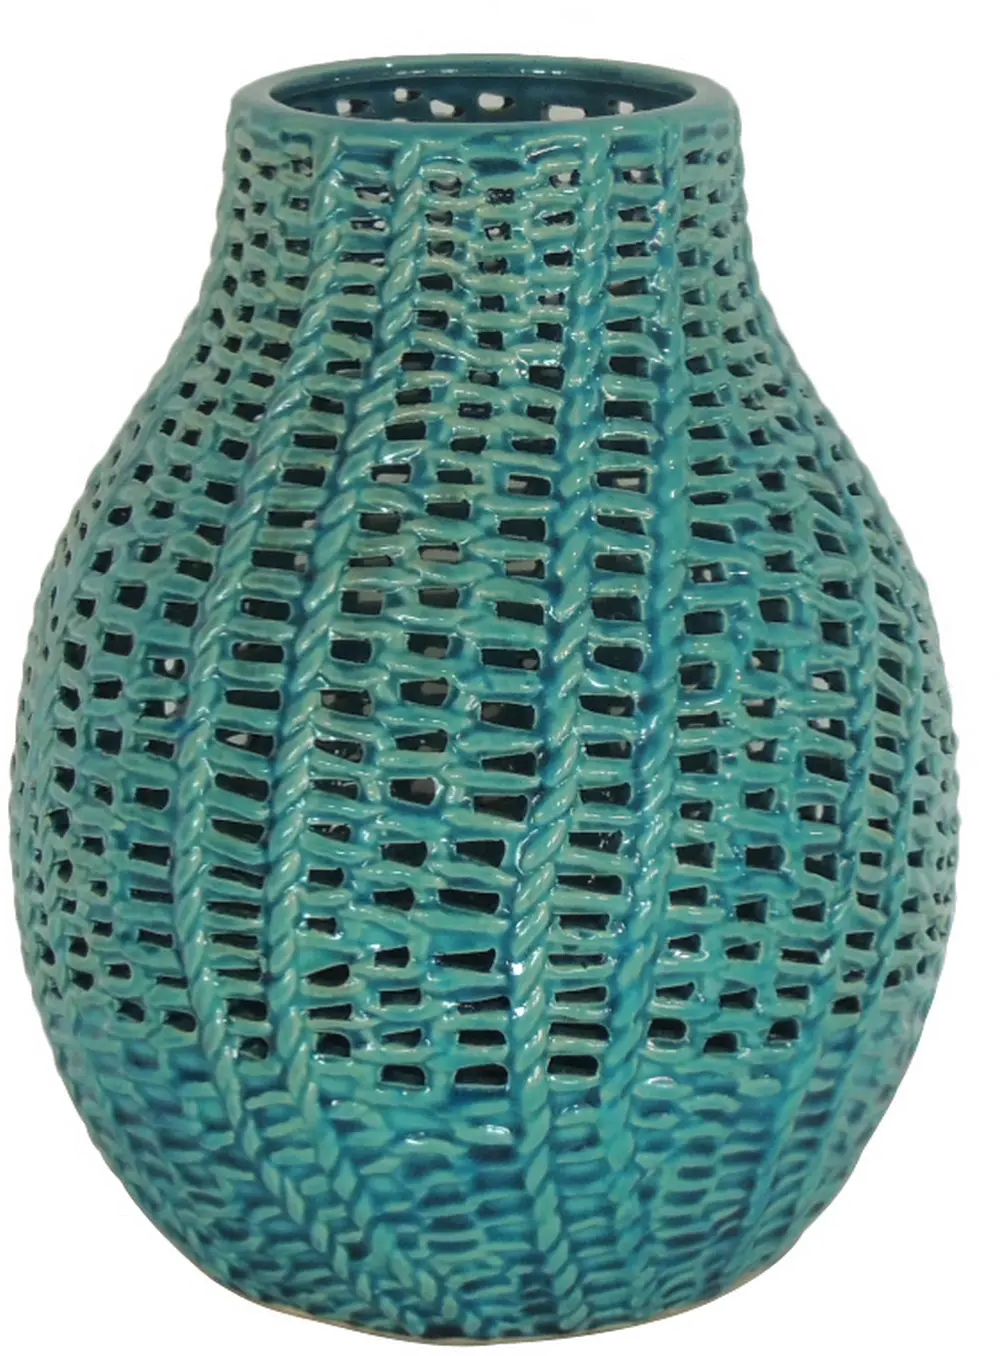 9 Inch Turquoise Decorative Vase-1